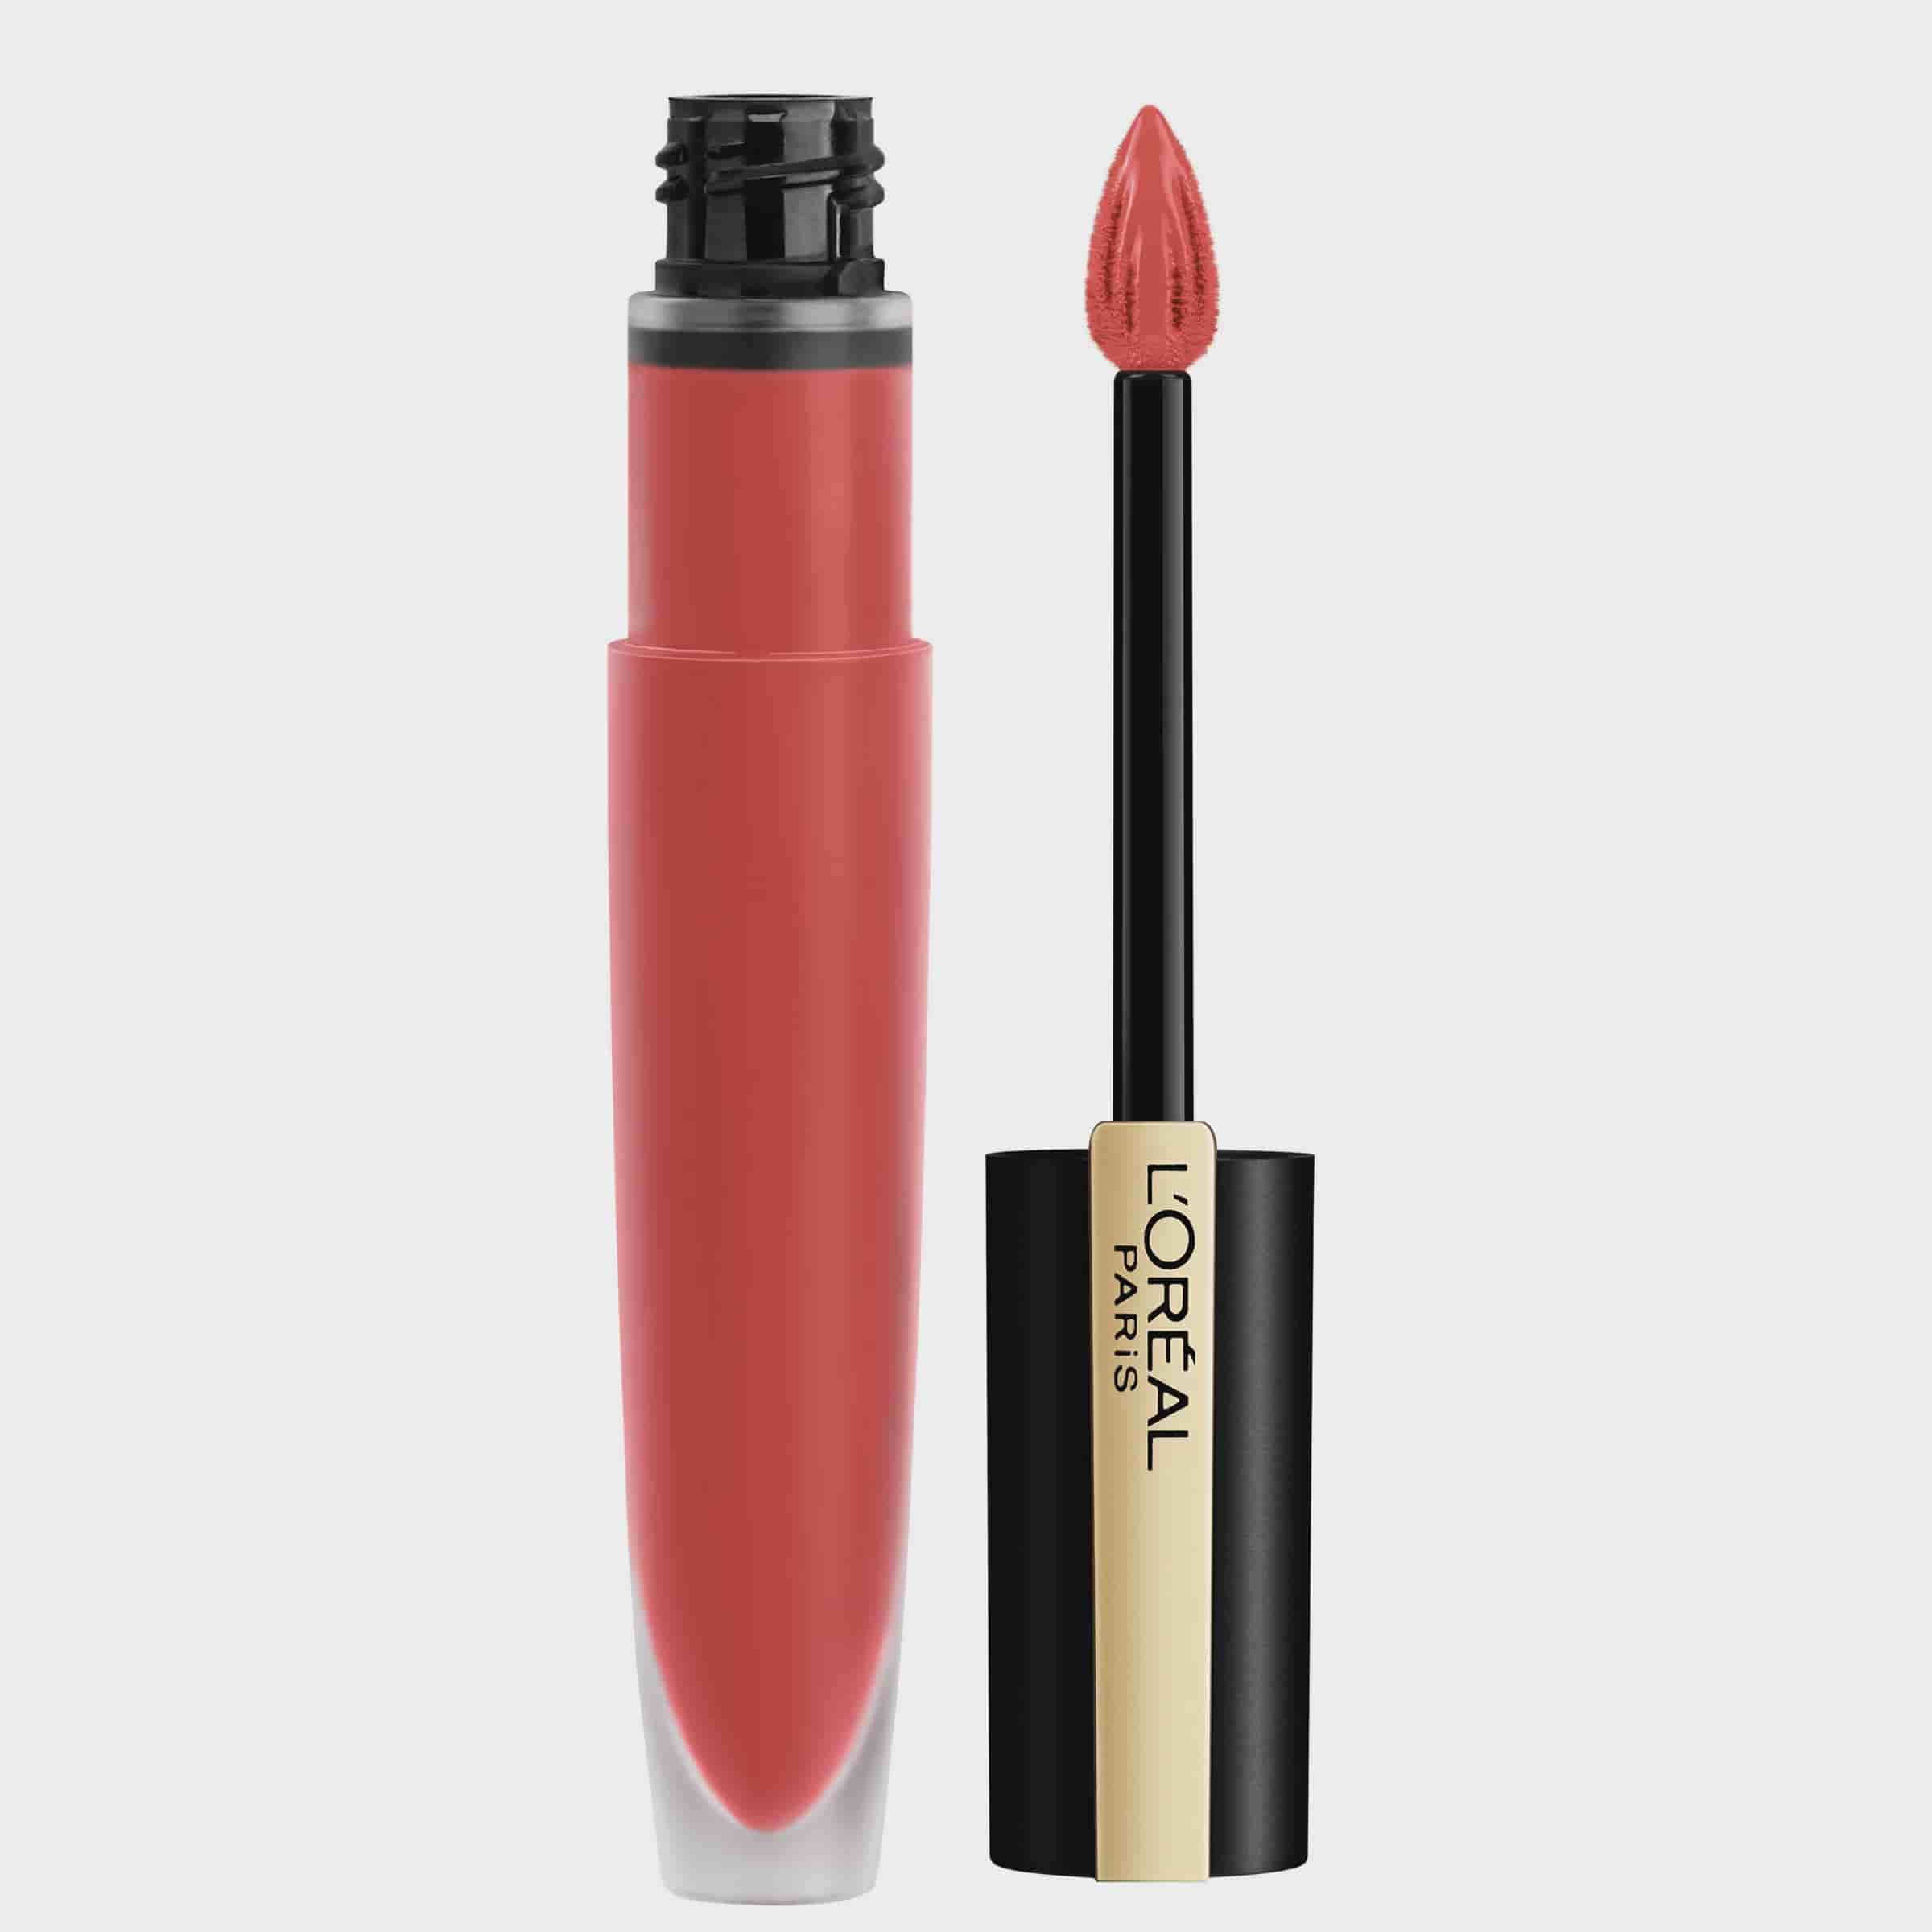 Review of Loreal Paris Rouge Signature Matte Liquid Lipstick Color